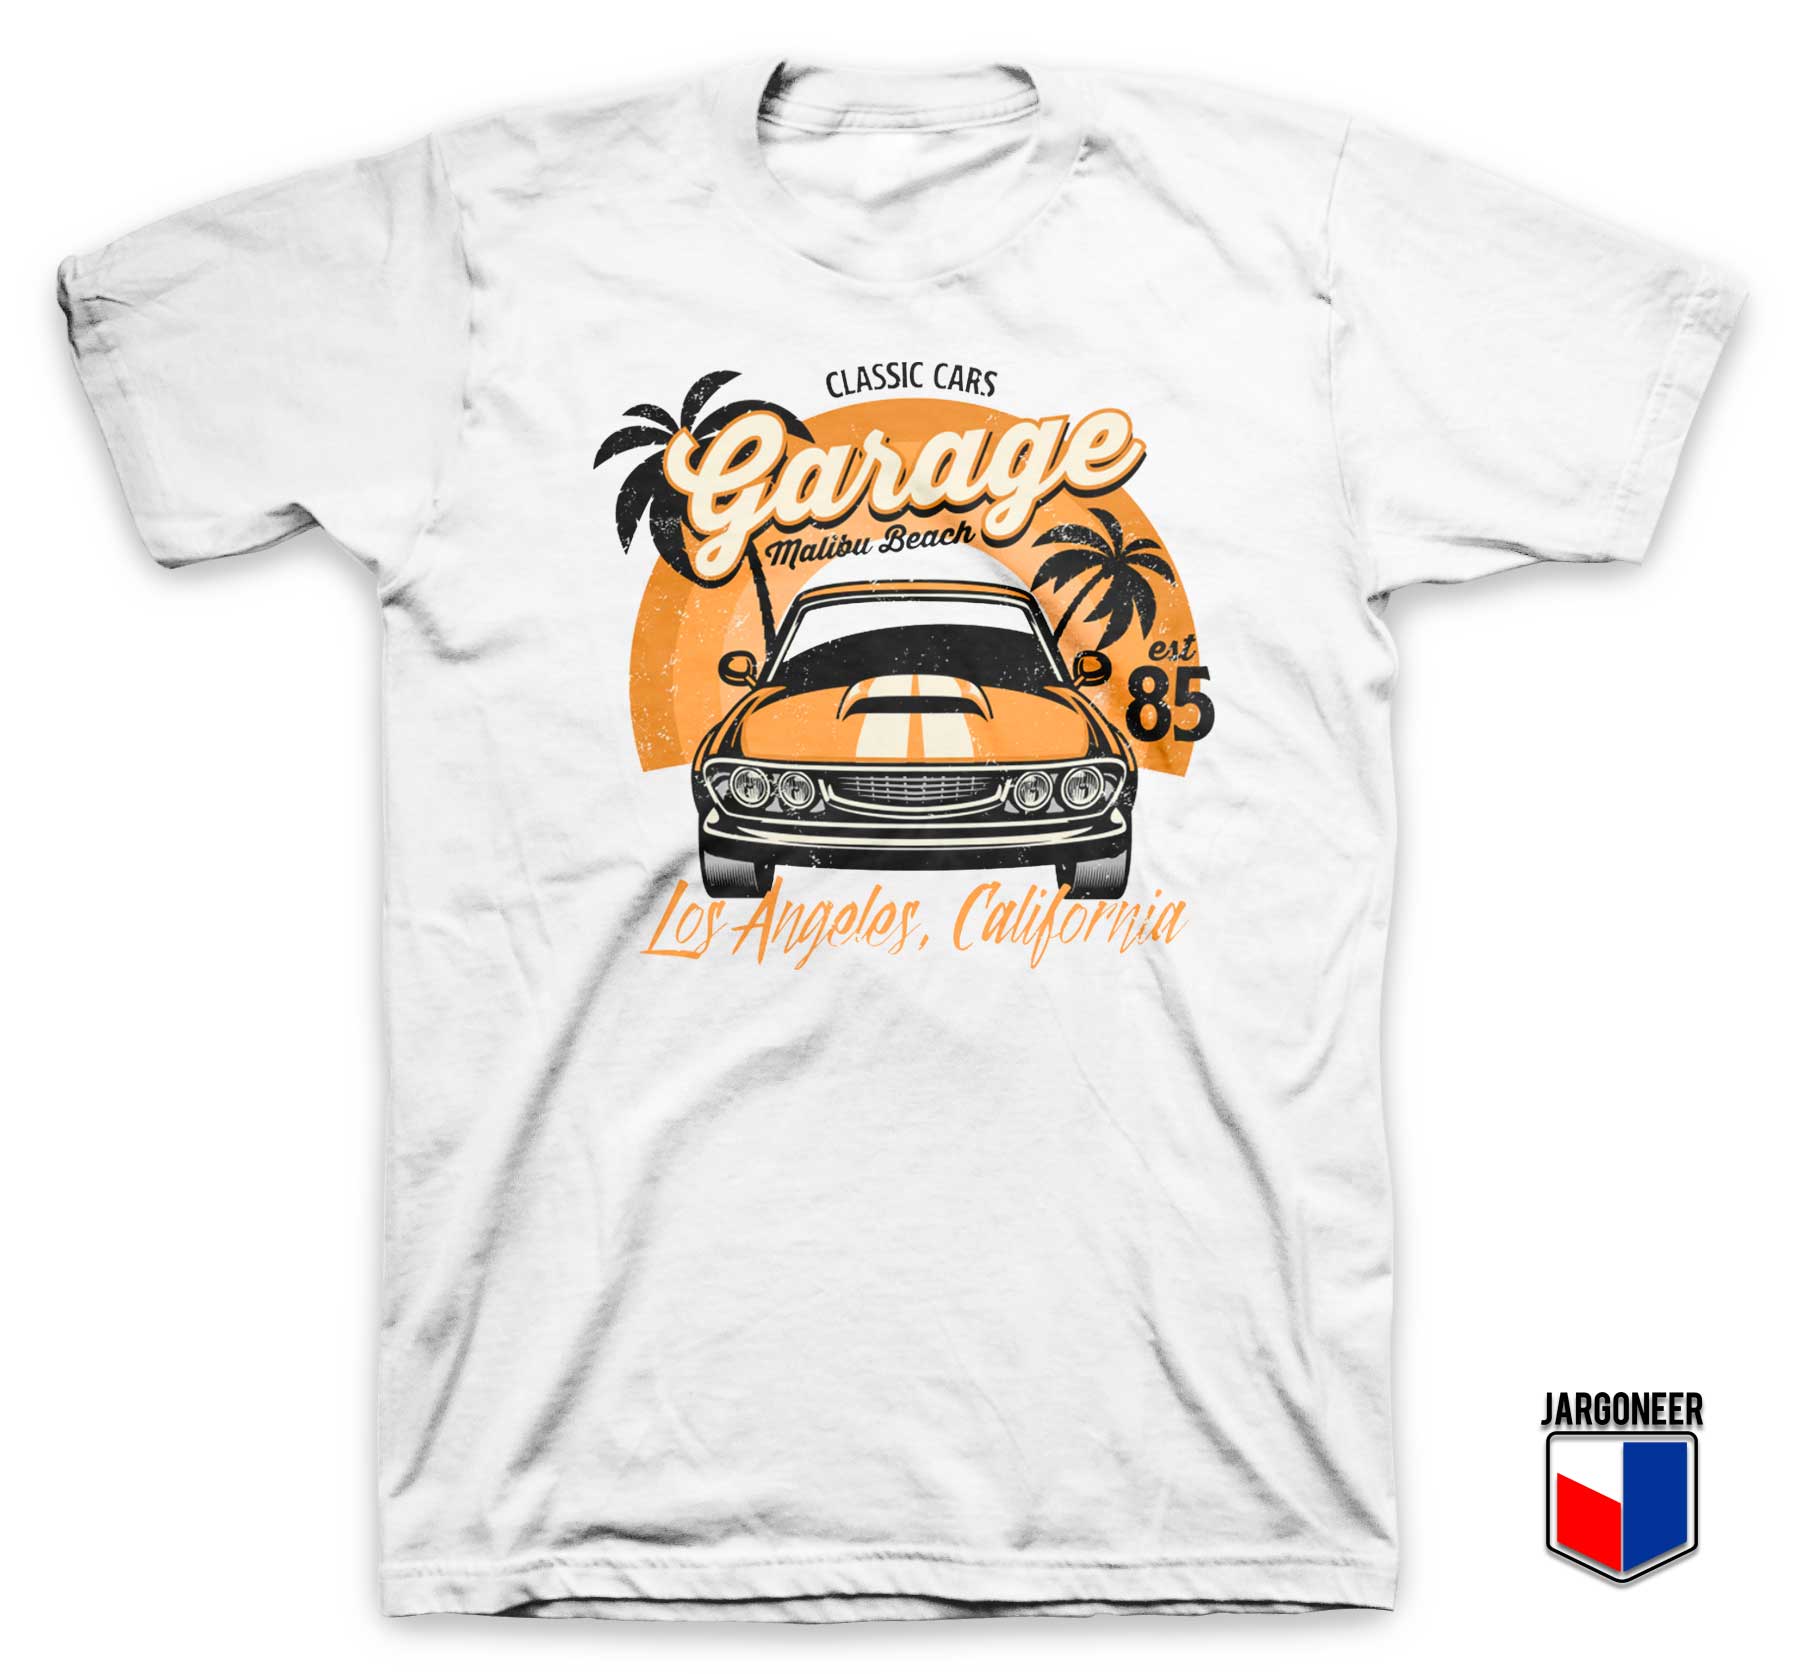 Classic Cars Malibu Beach T Shirt - Shop Unique Graphic Cool Shirt Designs